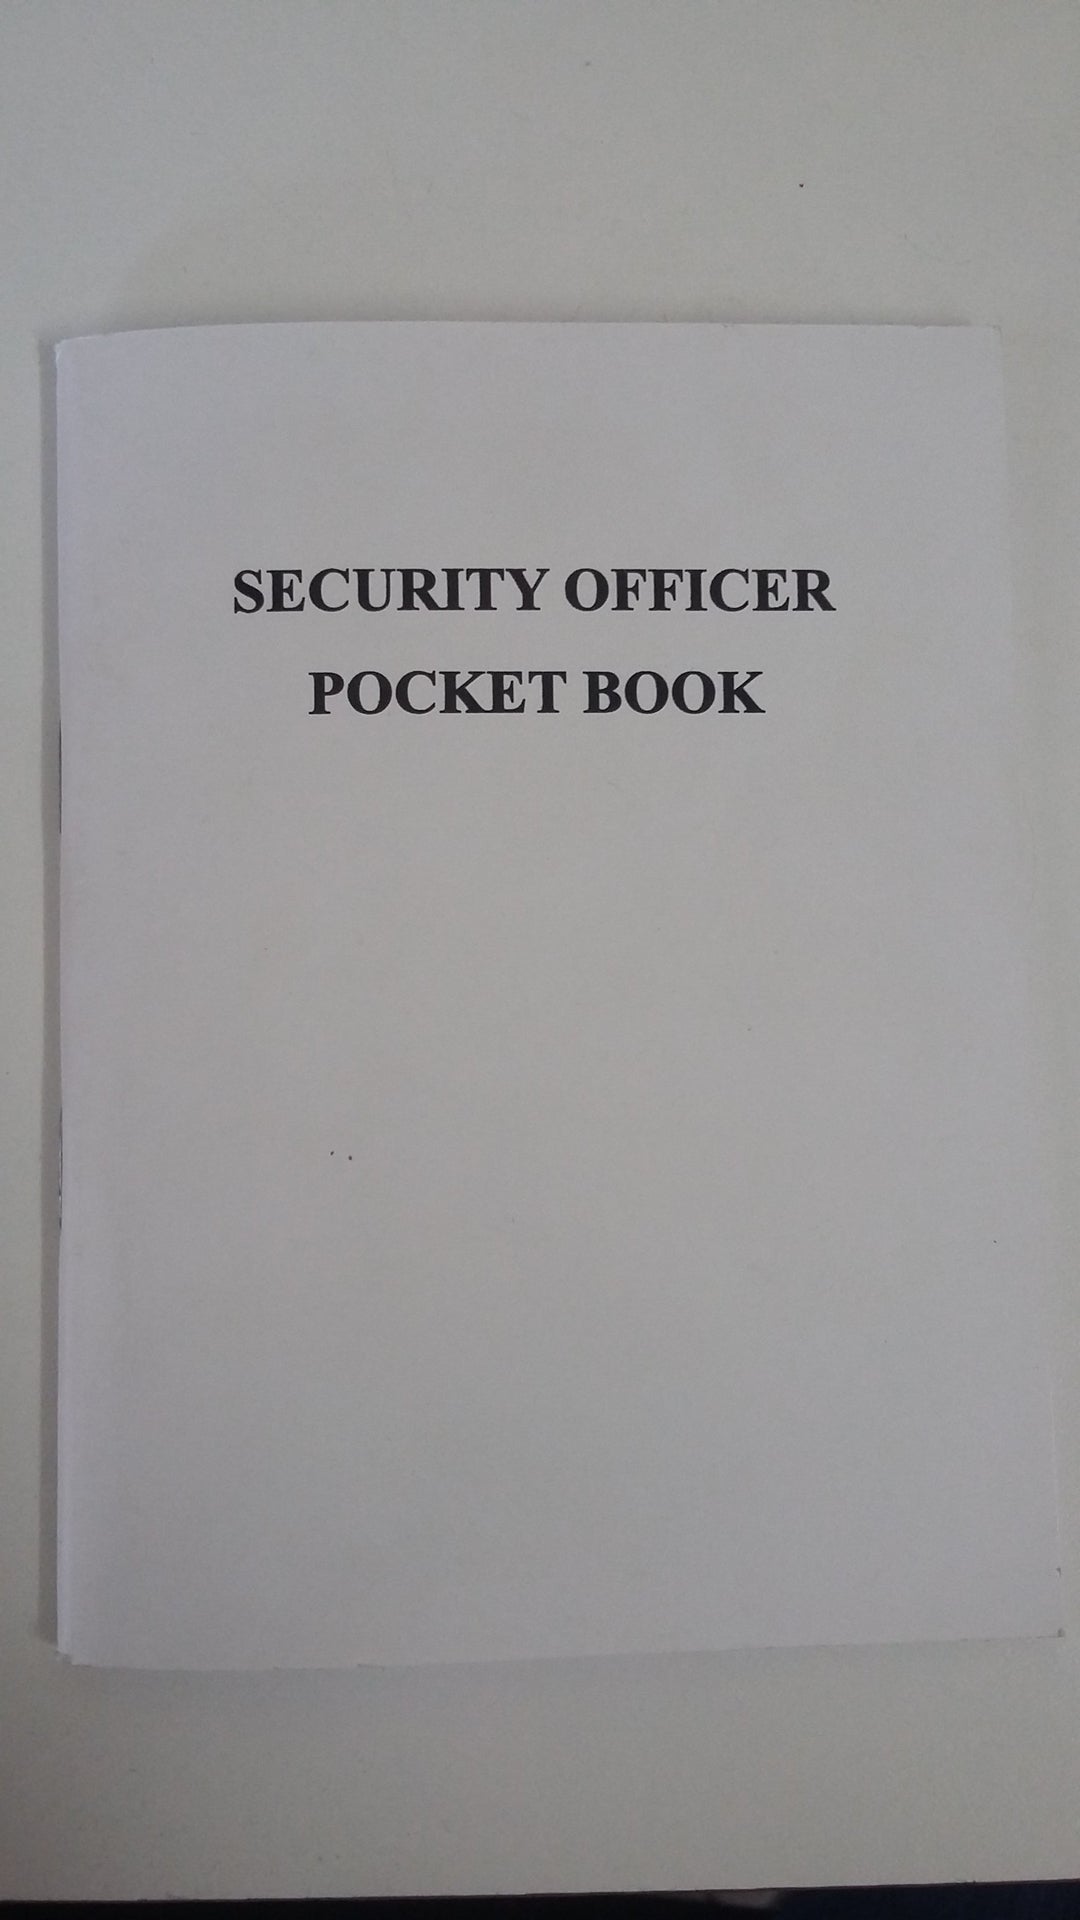 OFFICER POCKET BOOK - NeonSales